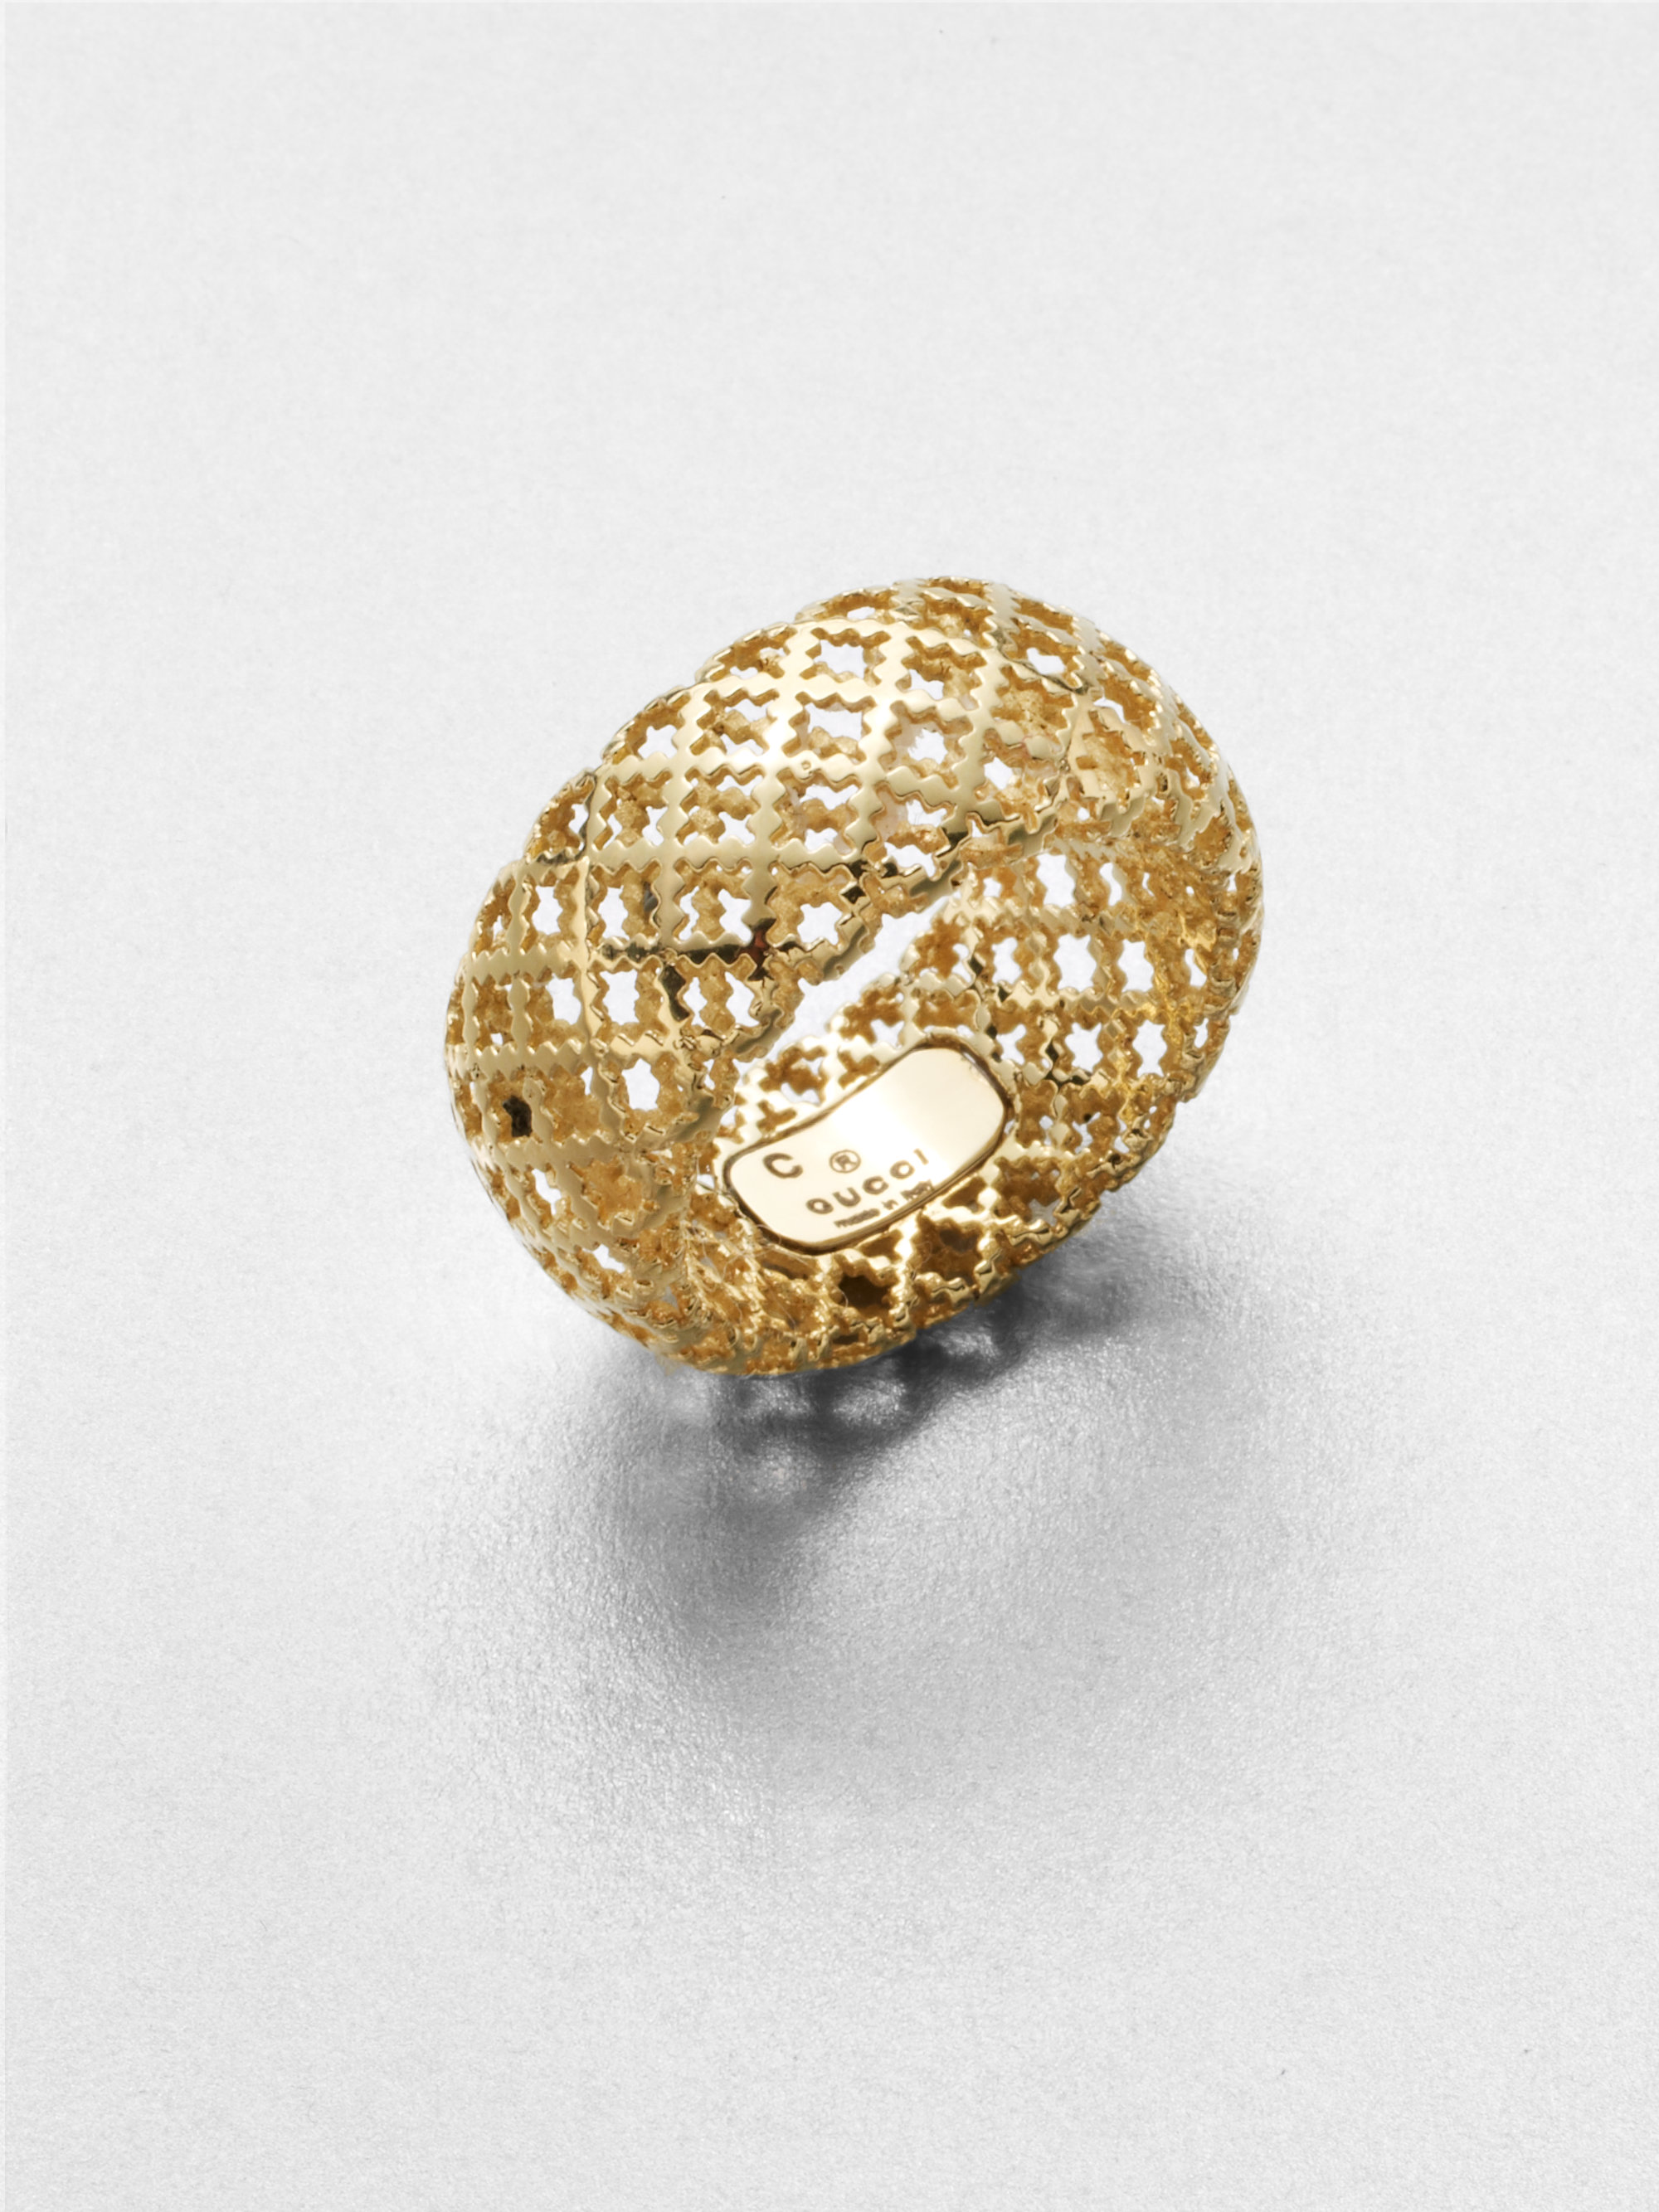 Lyst - Gucci Diamantissima 18k Yellow Gold Band Ring in Metallic